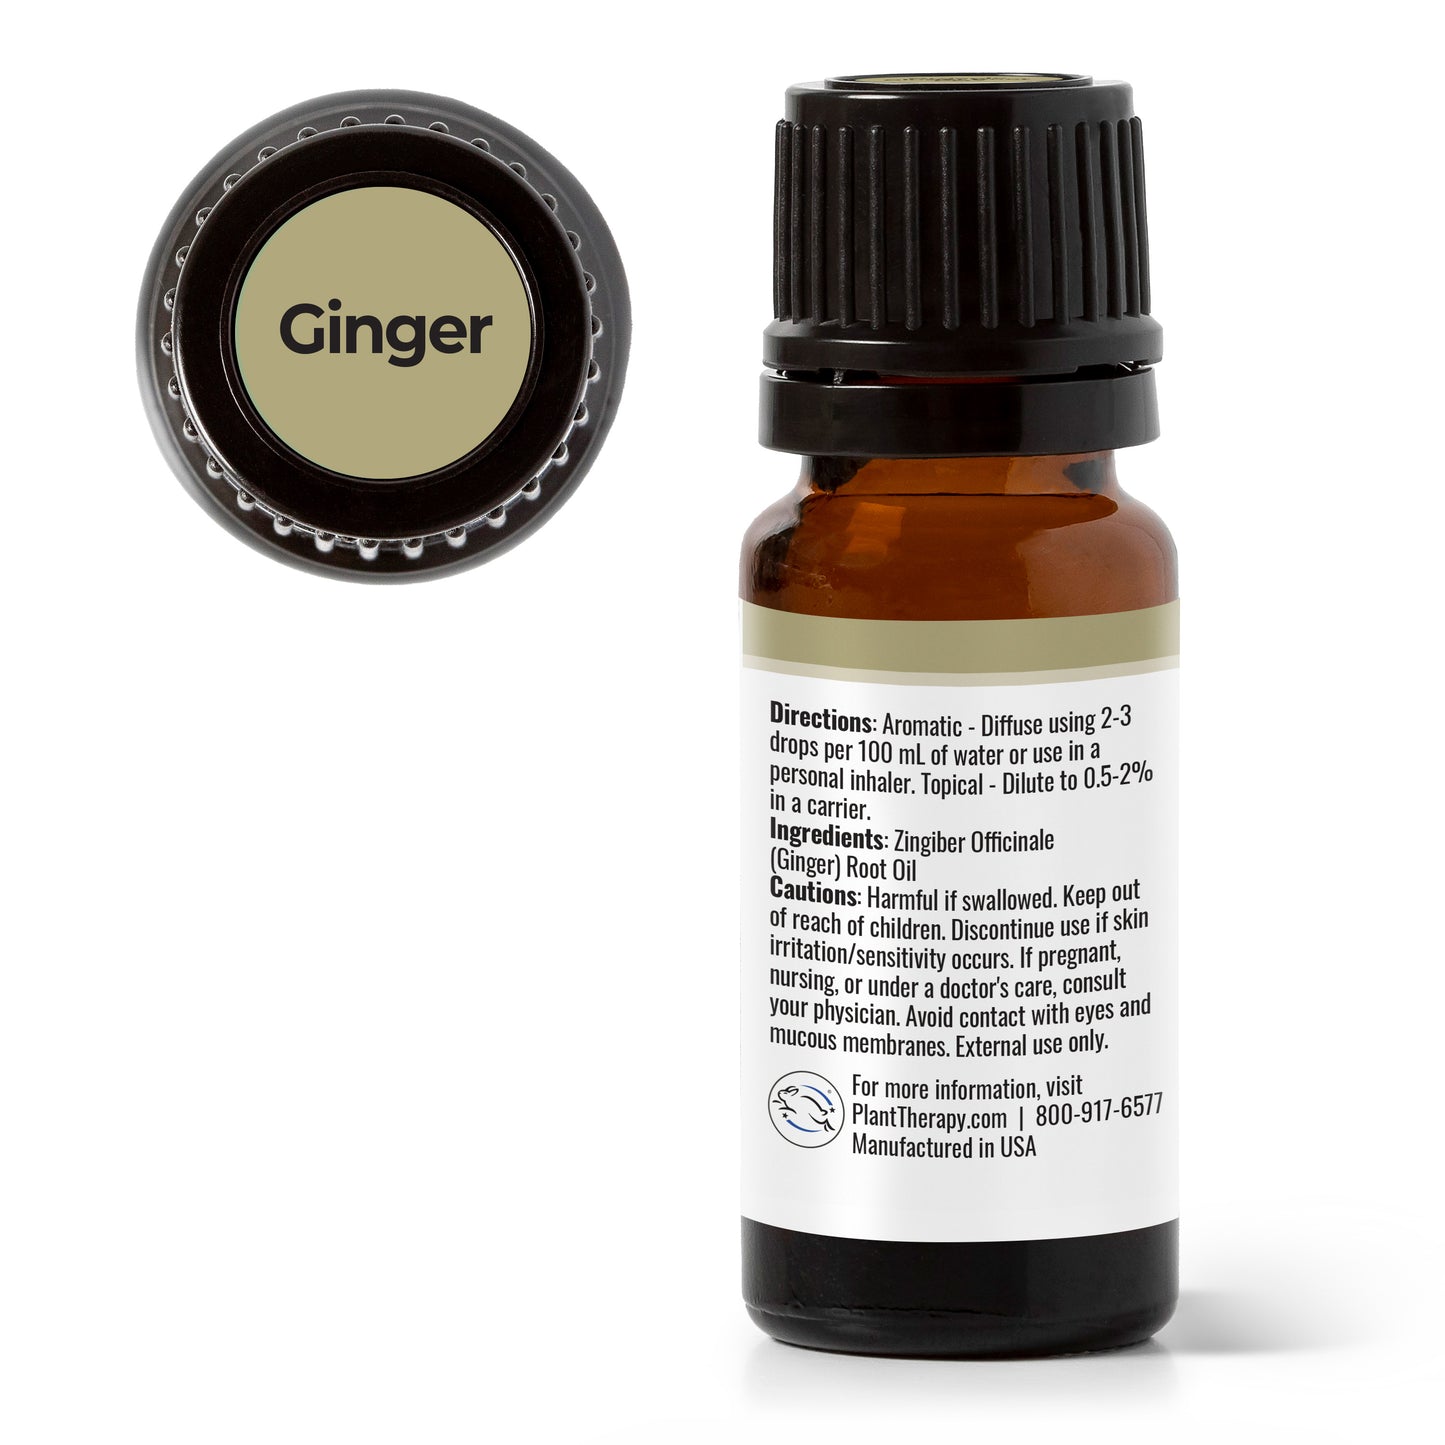 Ginger Essential Oil Ingredient Label & Top Dot